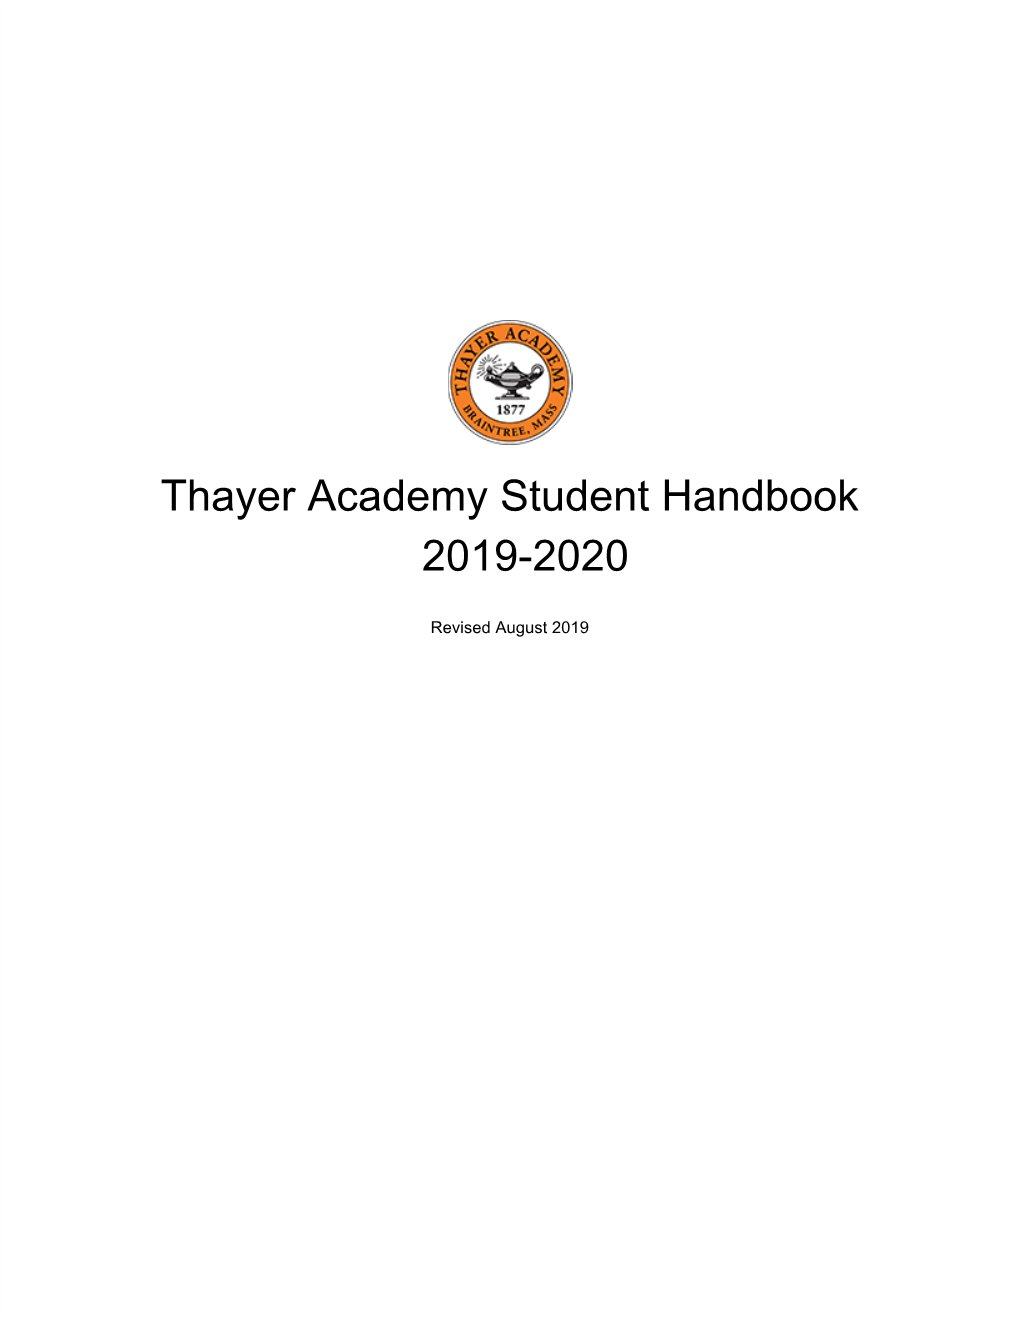 Thayer Academy Student Handbook 2019-2020